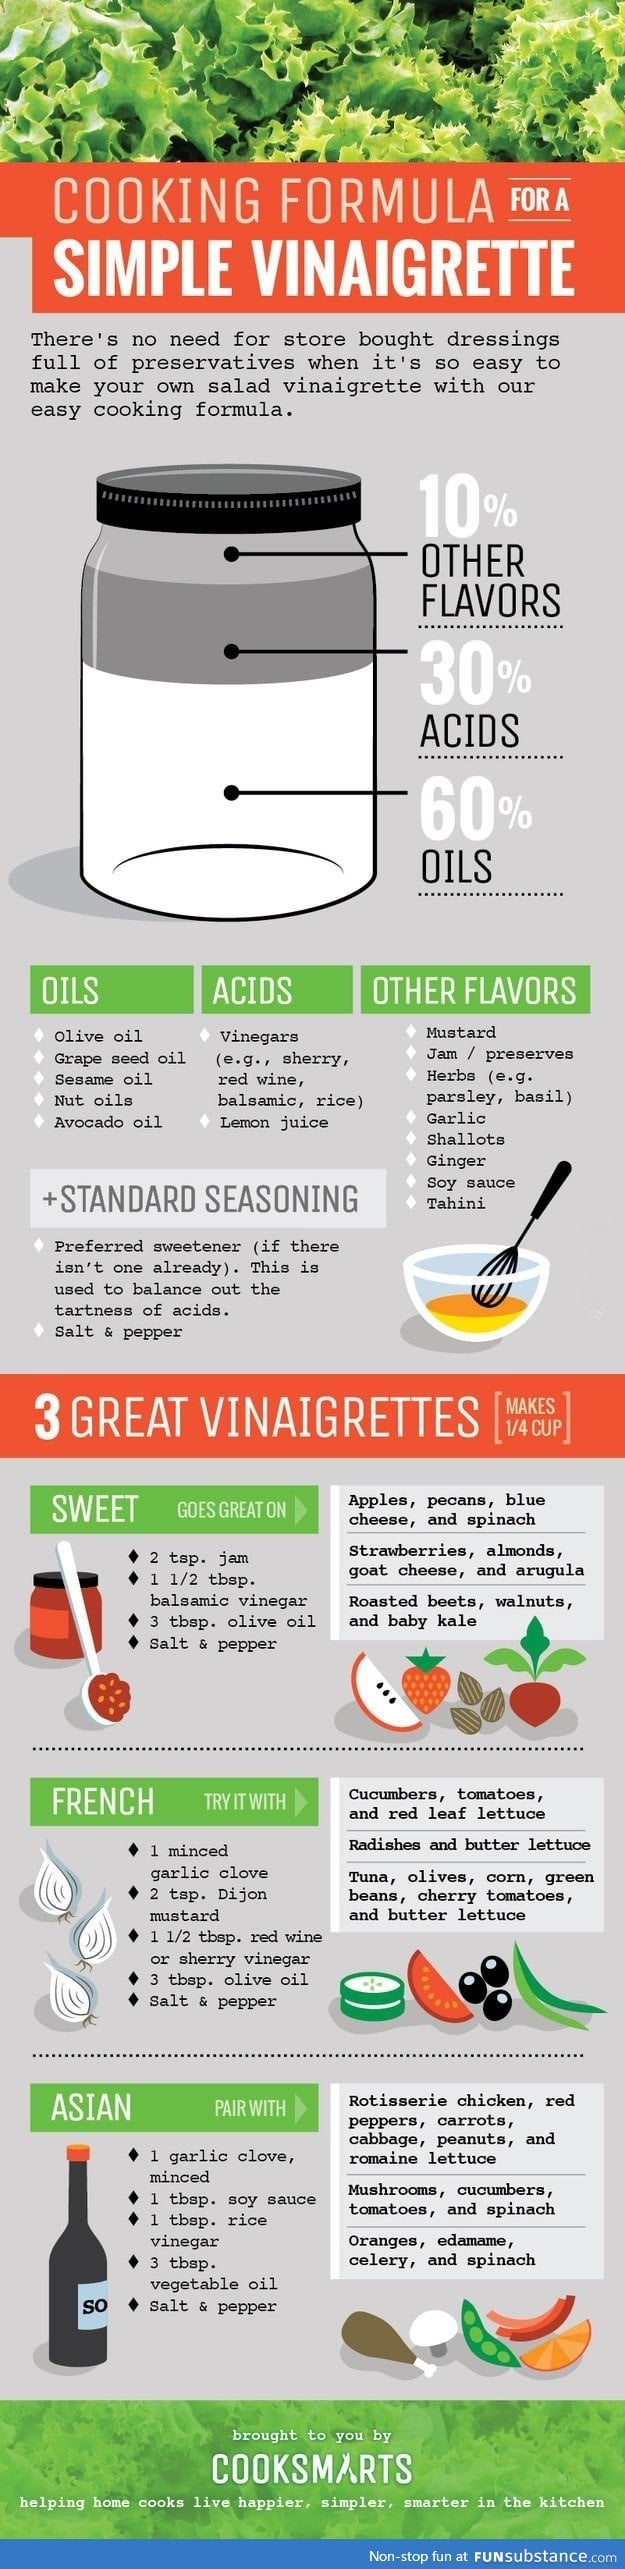 Cooking formula for a simple vinaigrette